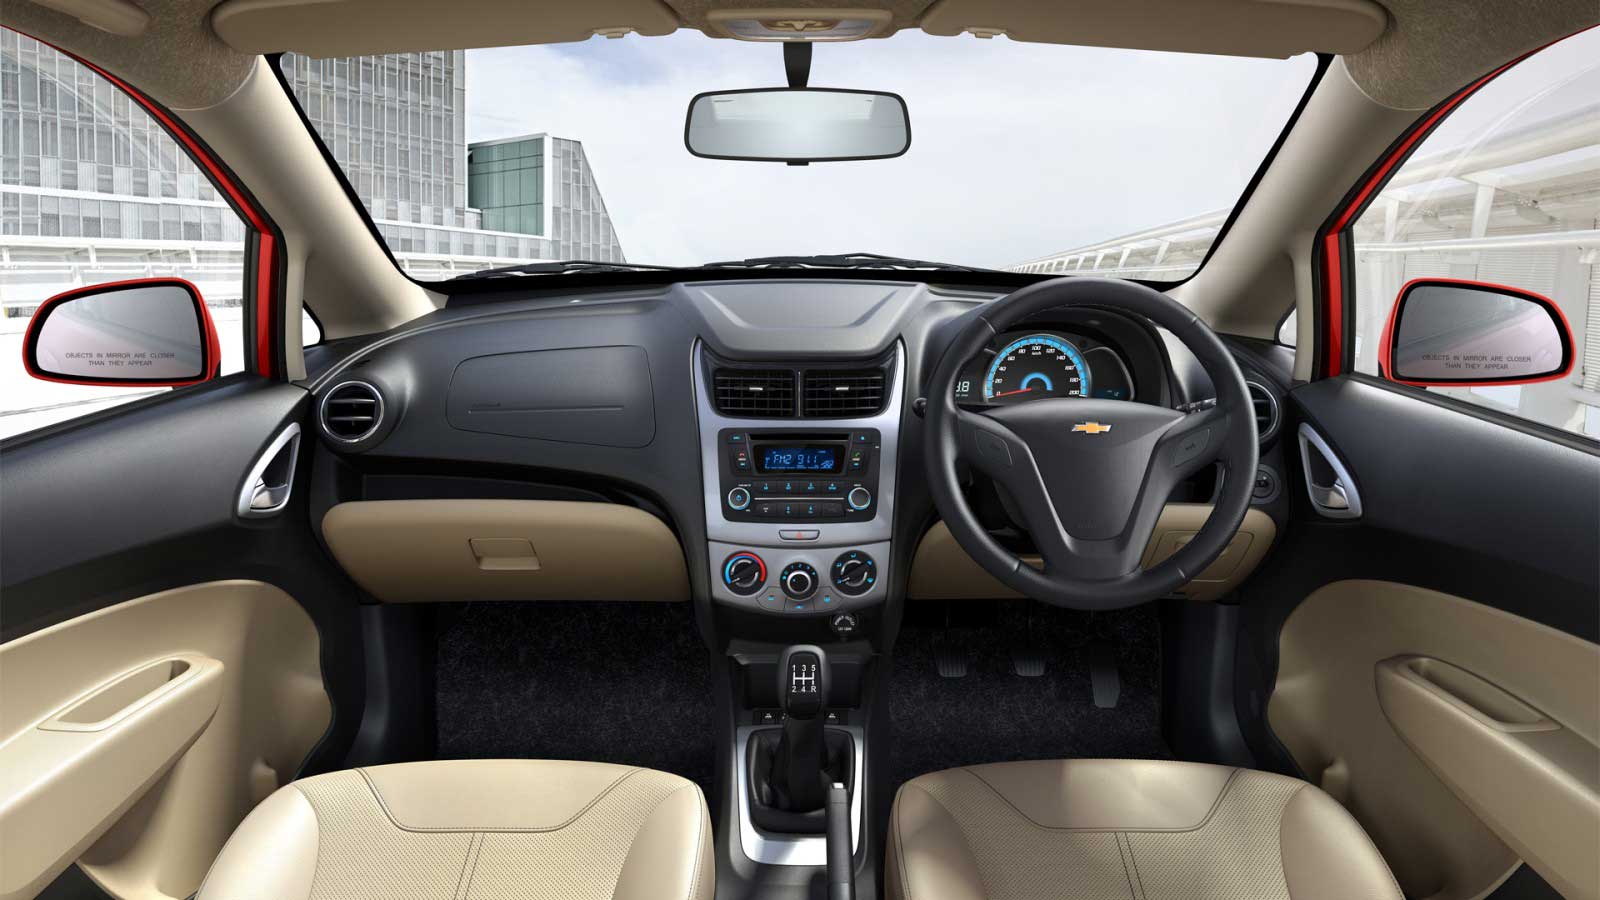 Chevrolet Sail Hatchback 1.2 Base Interior front view